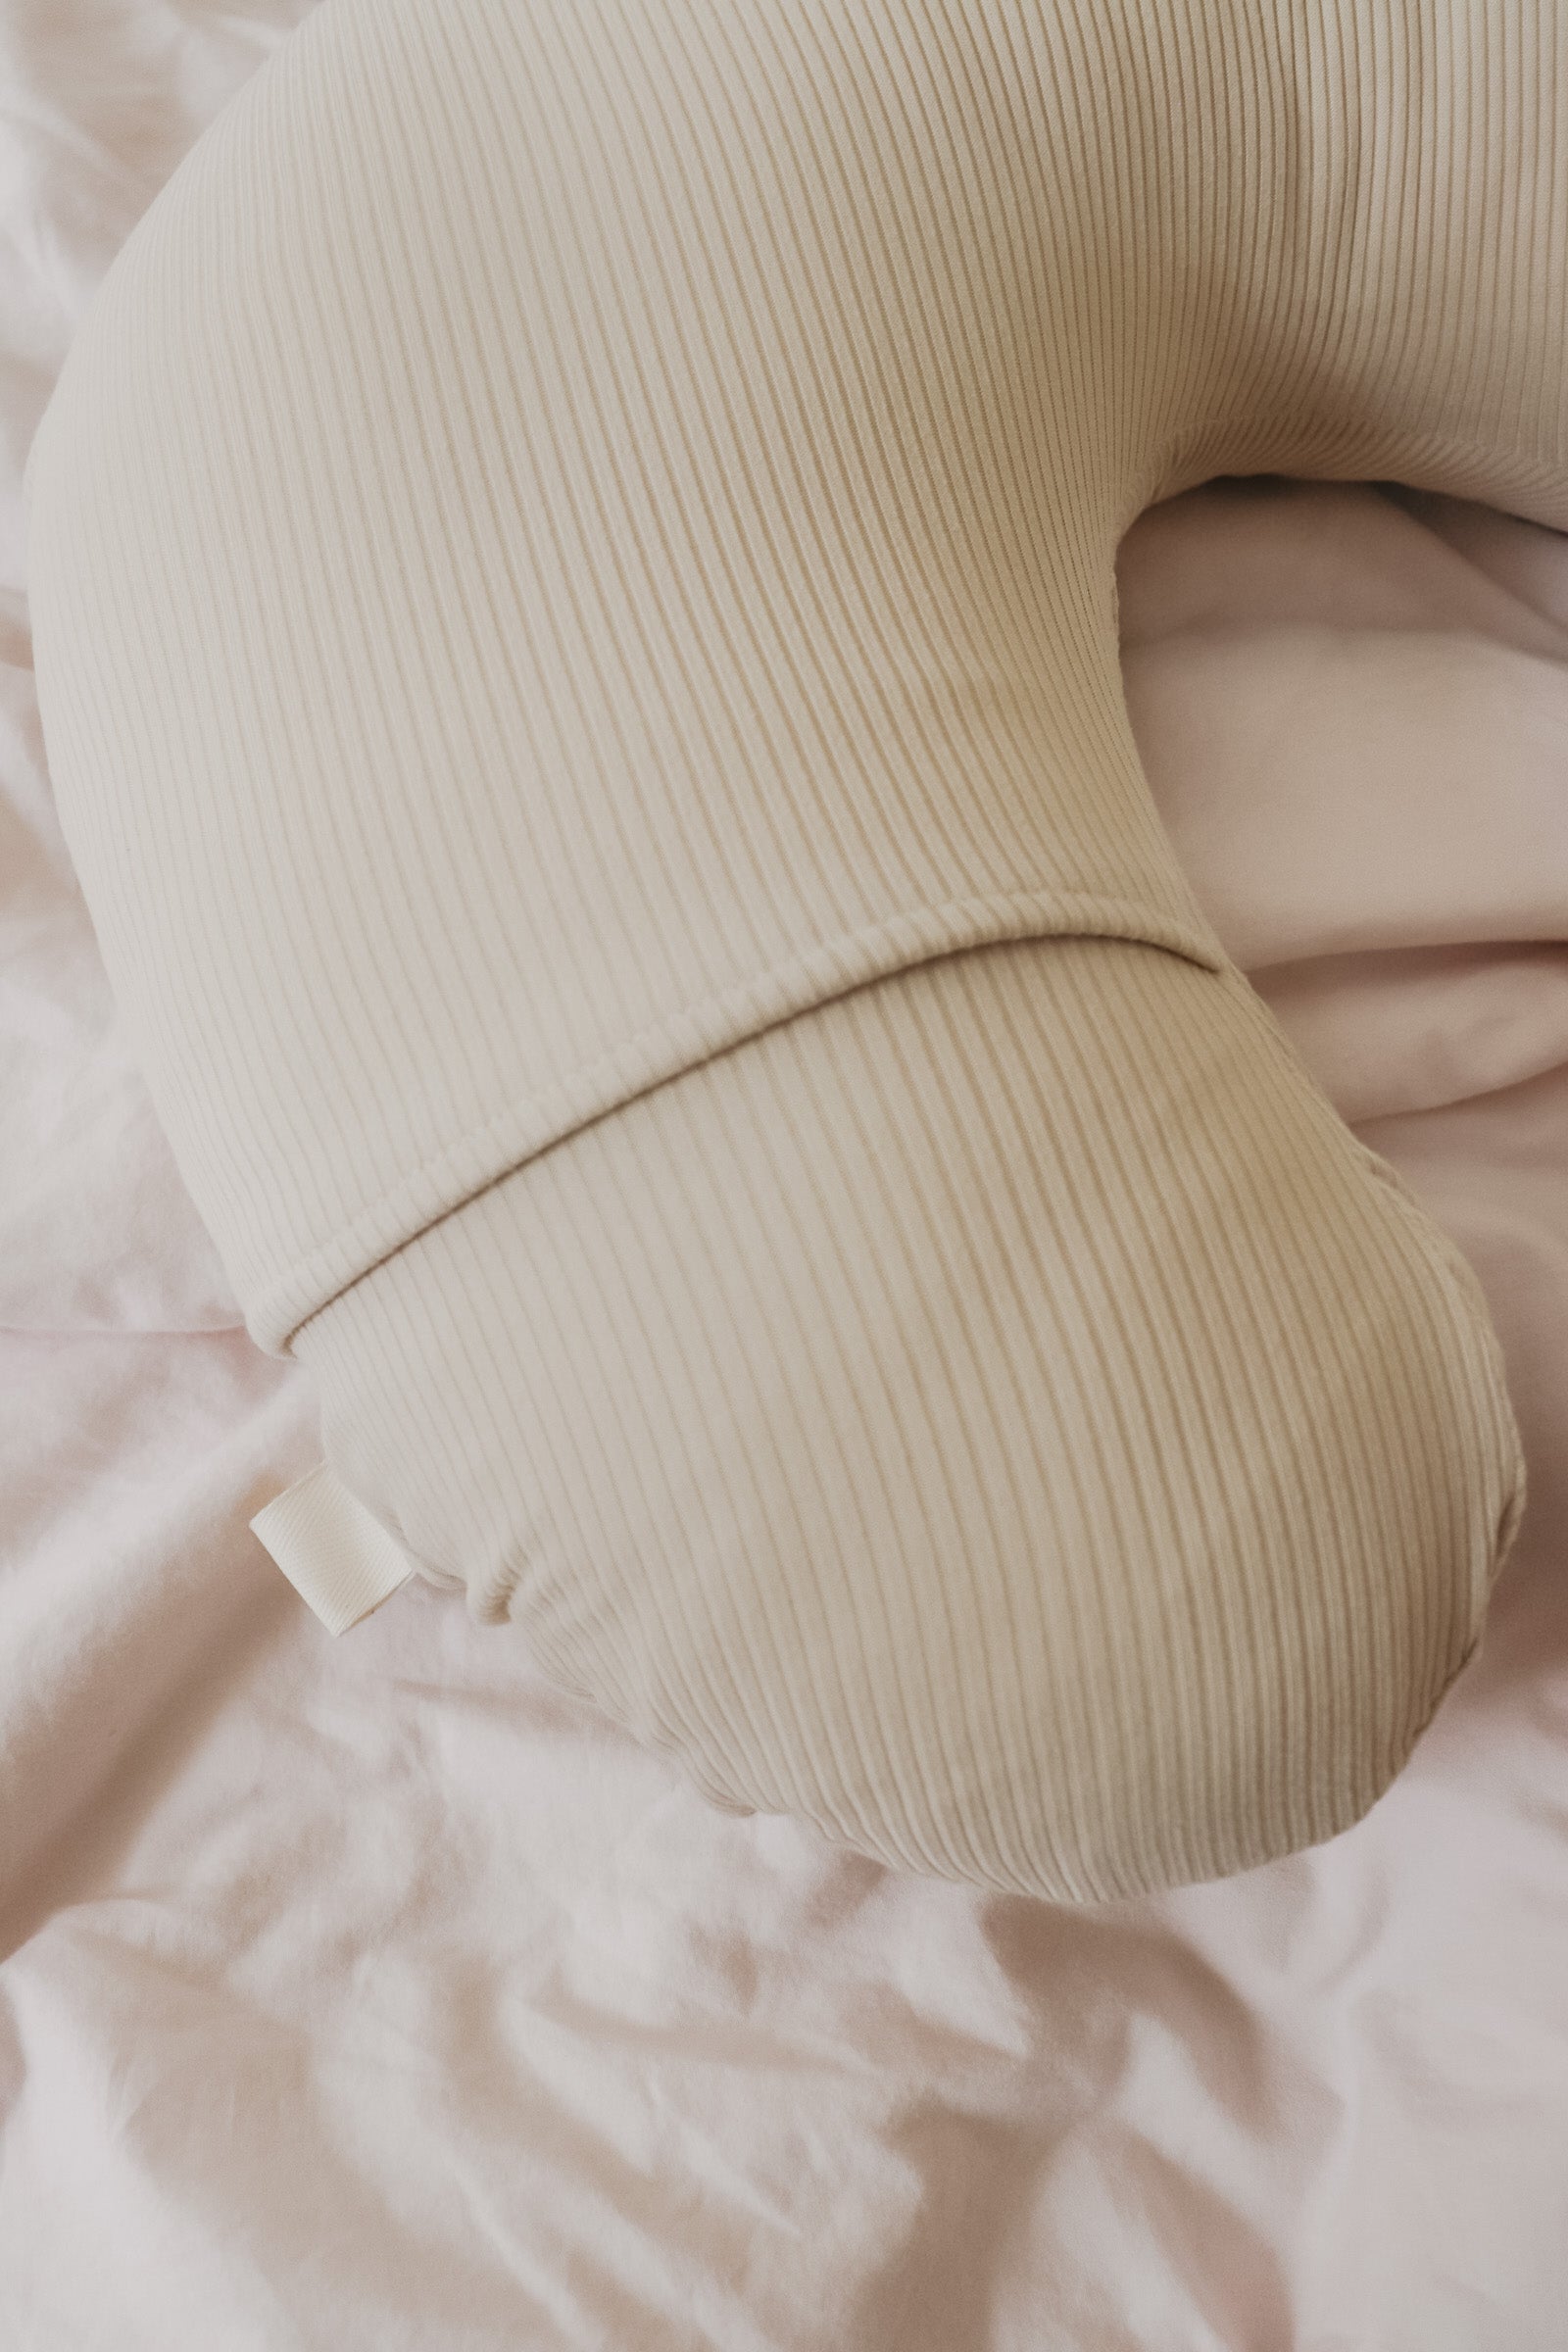 Nursing Pillows & Covers - Kmart